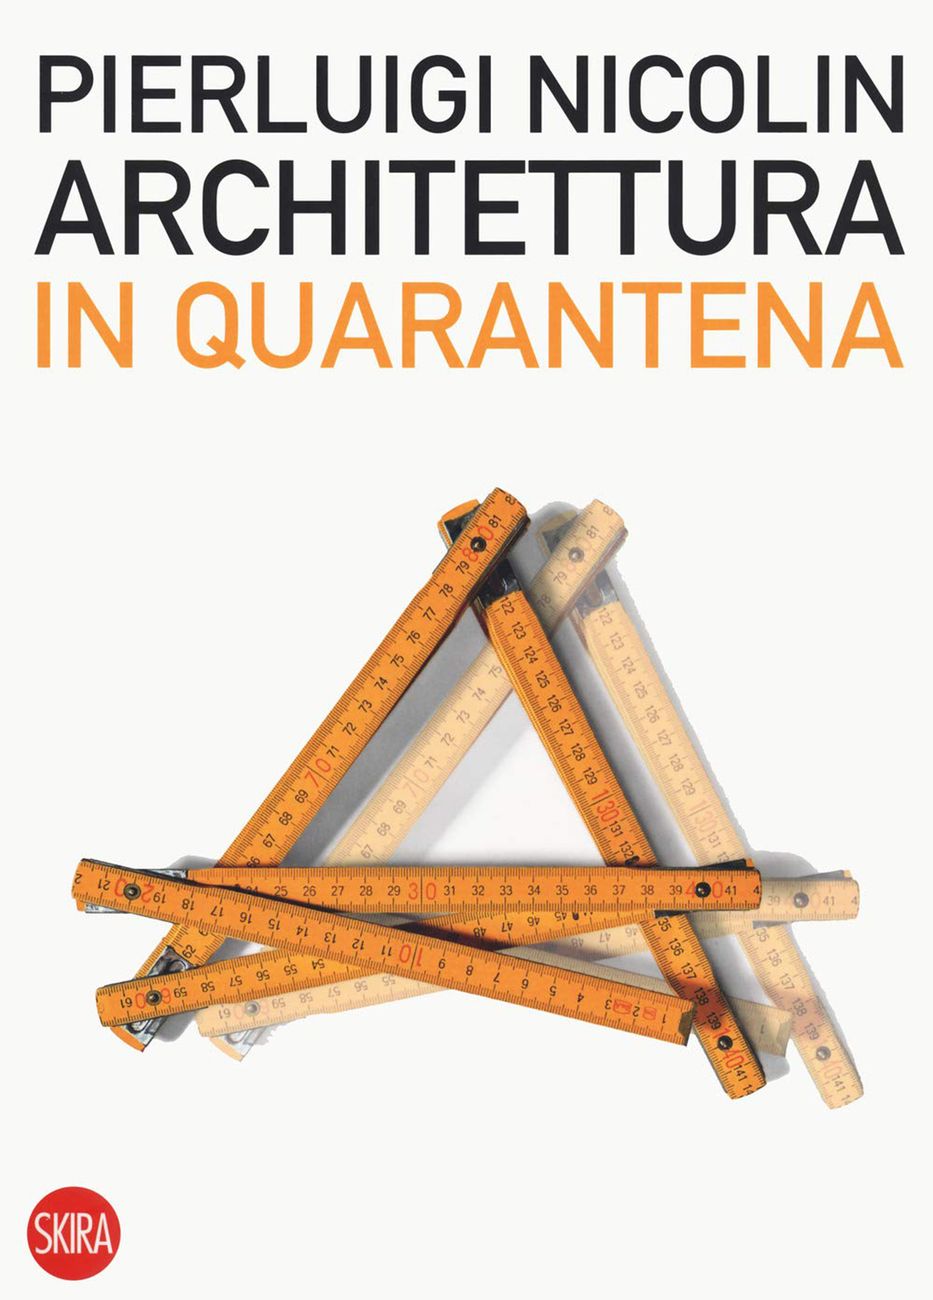 Pierluigi Nicolin – Architettura in quarantena (Skira, Milano 2020)